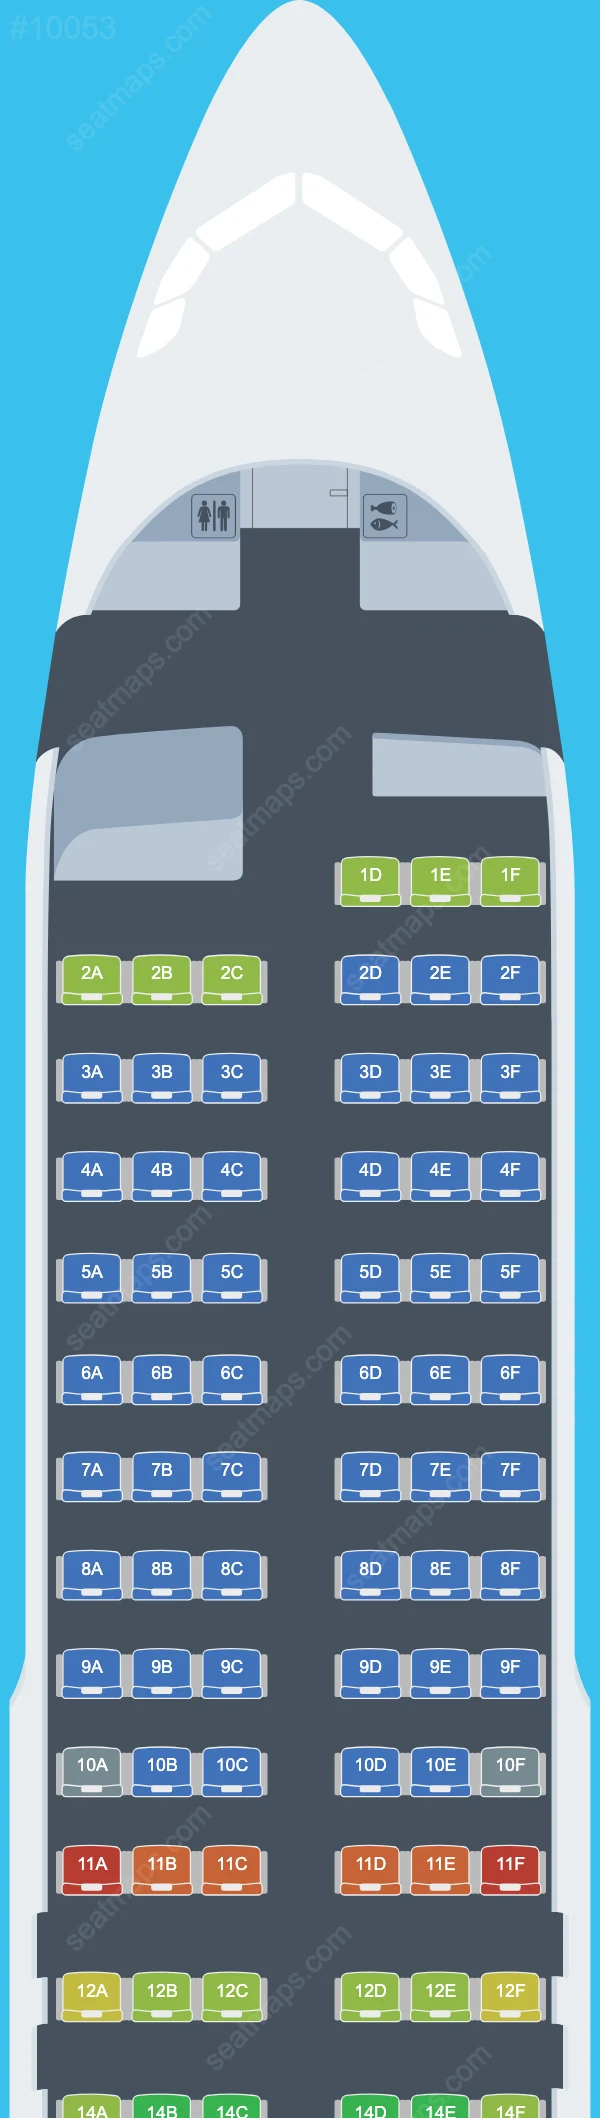 Transavia France Airbus A320 Seat Maps A320-200